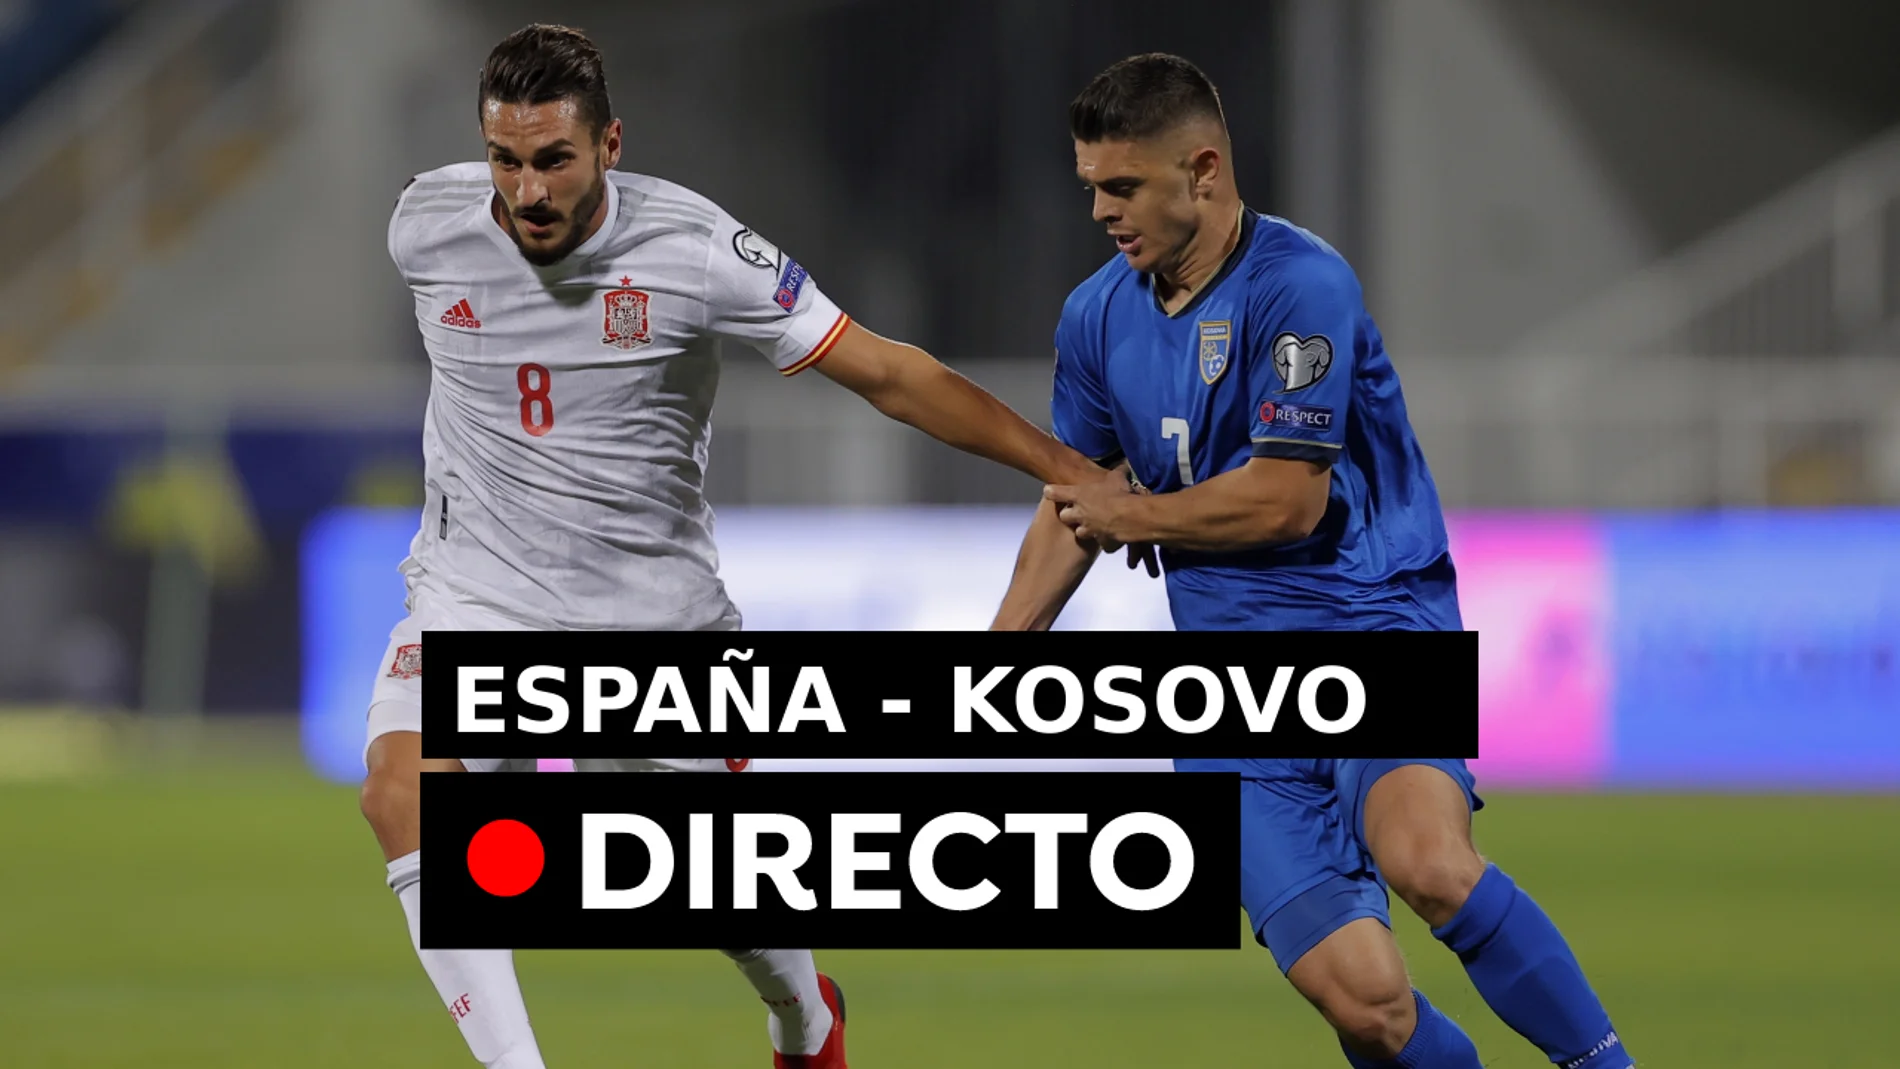 Resultado España - Kosovo online: Partido de fútbol de hoy en directo